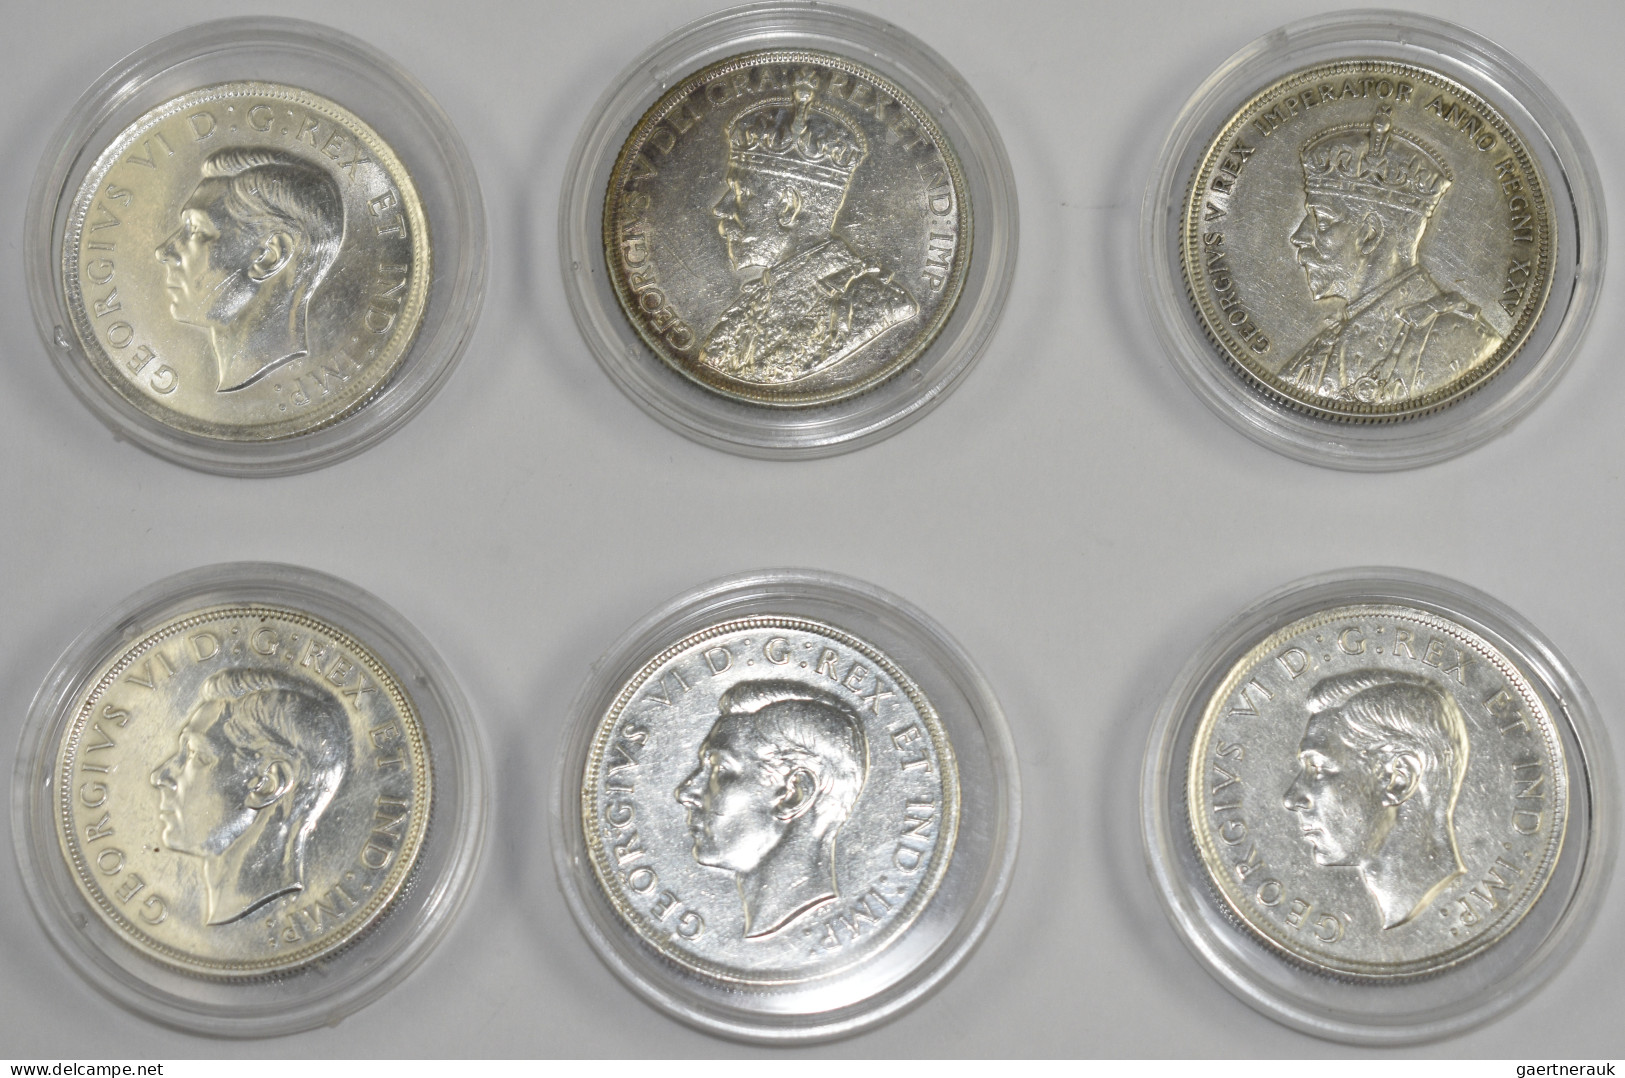 Kanada: Lot 6 X 1 Dollar Kanu, Dabei 1935, 1936, 1937, 1938, 1946 Und 1947. - Canada